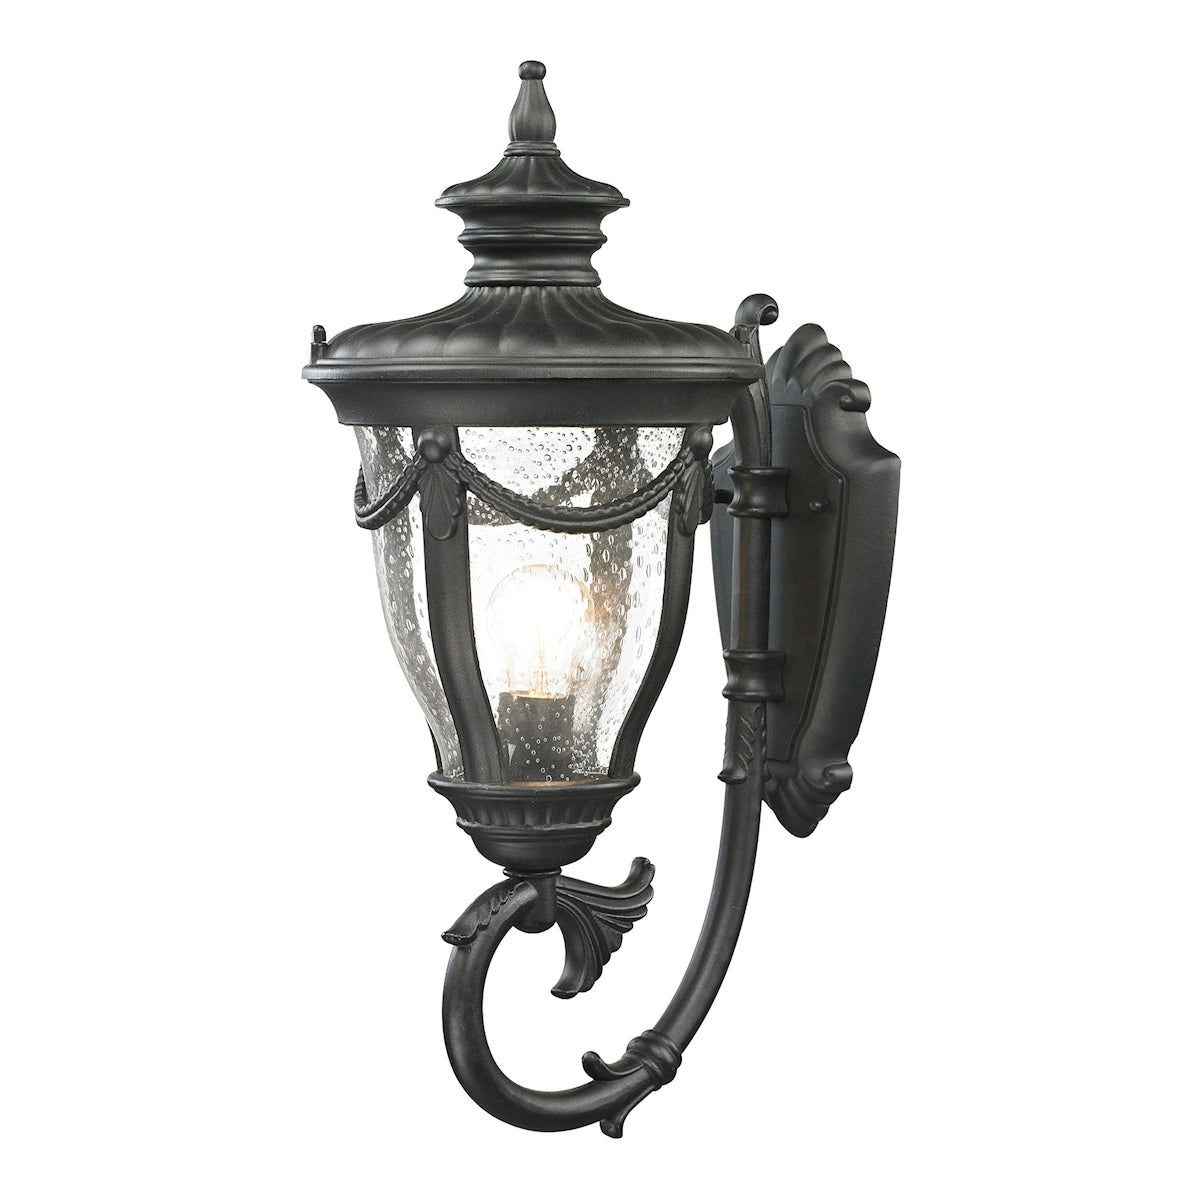 ELK Lighting 45076/1 Anise 1-Light Outdoor Wall Lamp in Textured Matte Black